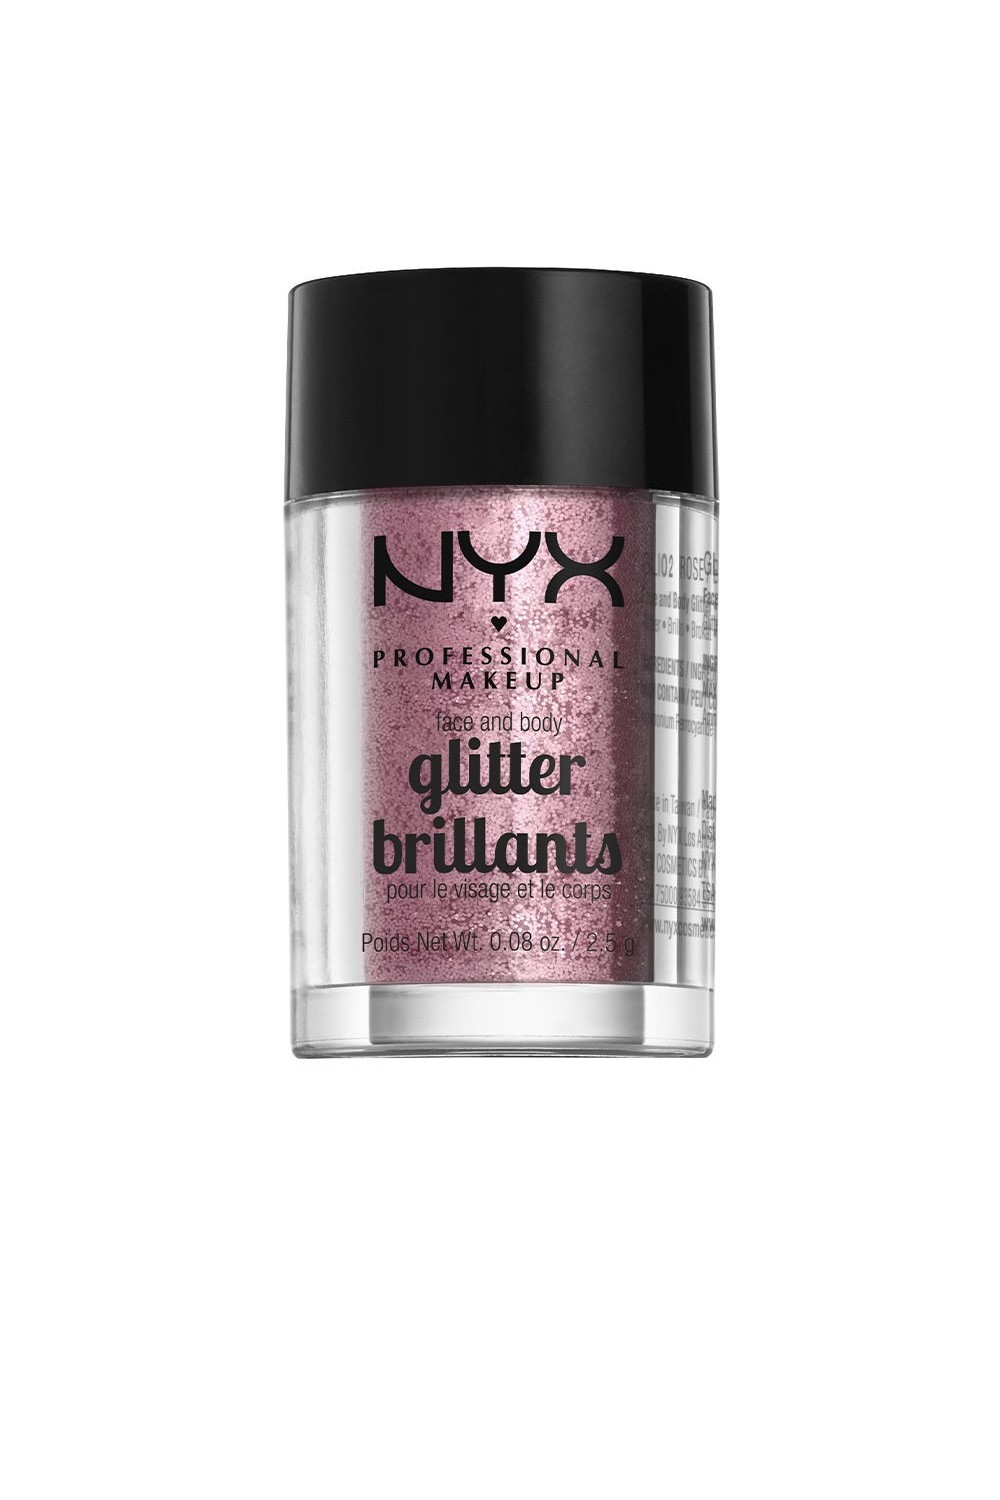 Nyx Glitter Brillants Face and Body Rose 2,5g